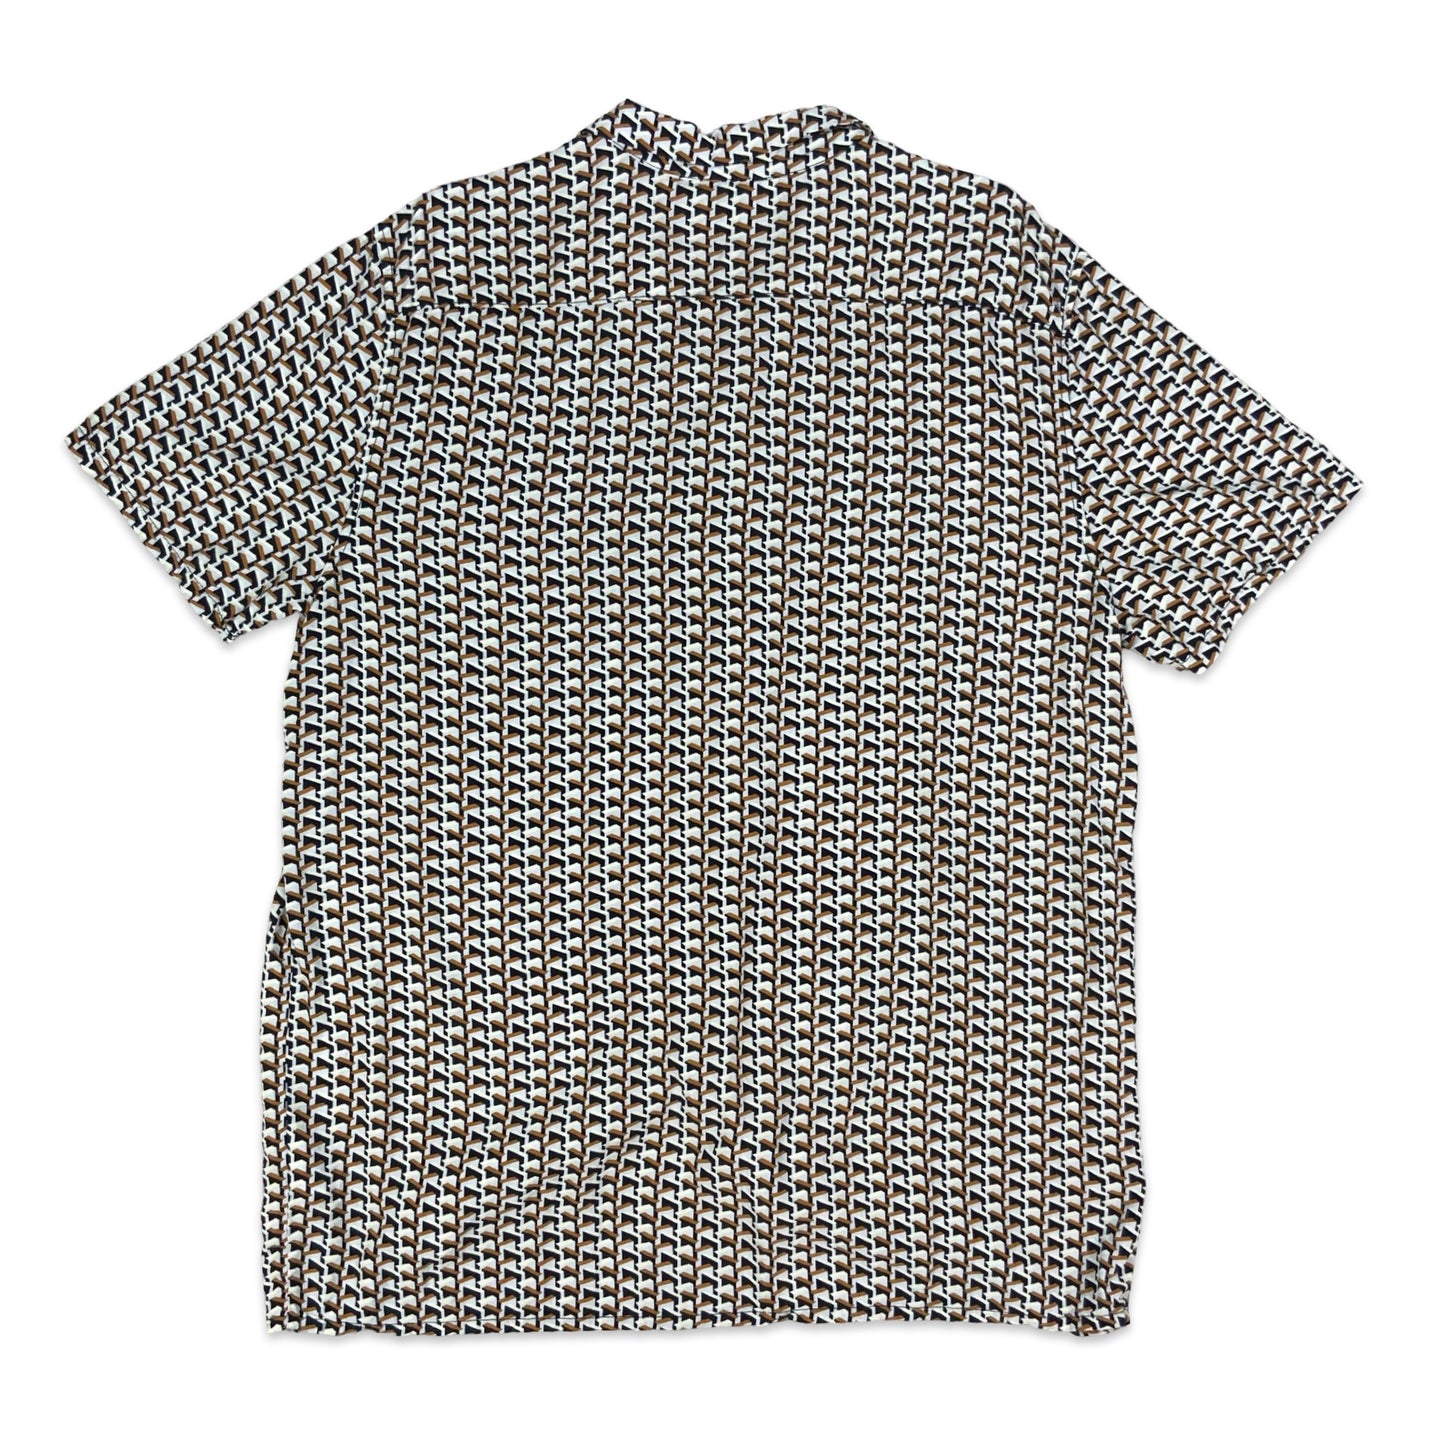 90s Navy & Orange Geometric Print Shirt XL